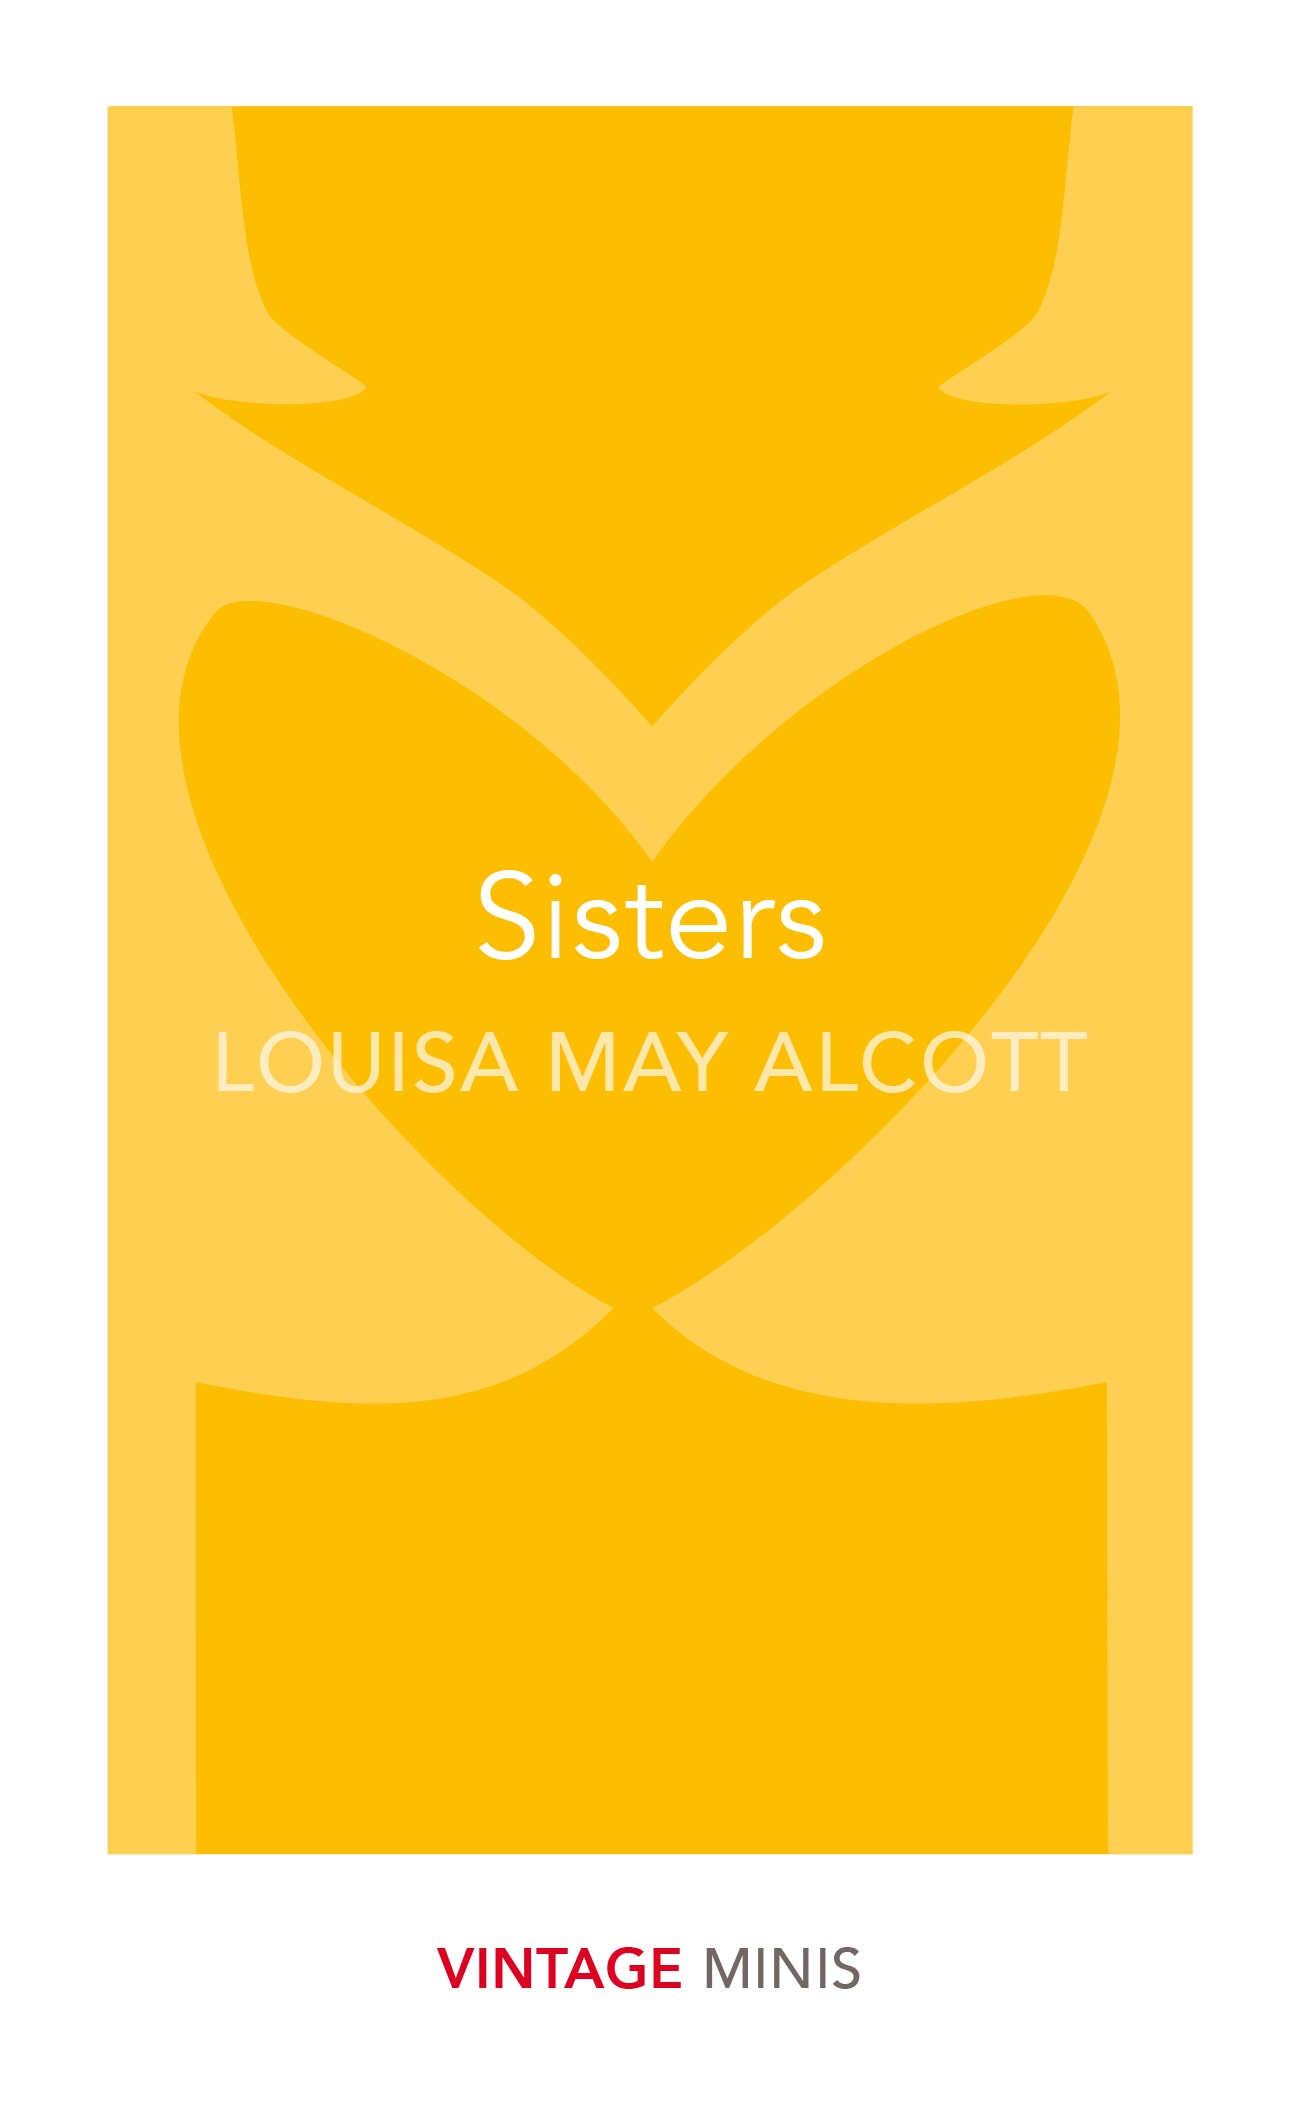 Book “Sisters” by Louisa May Alcott — June 8, 2017